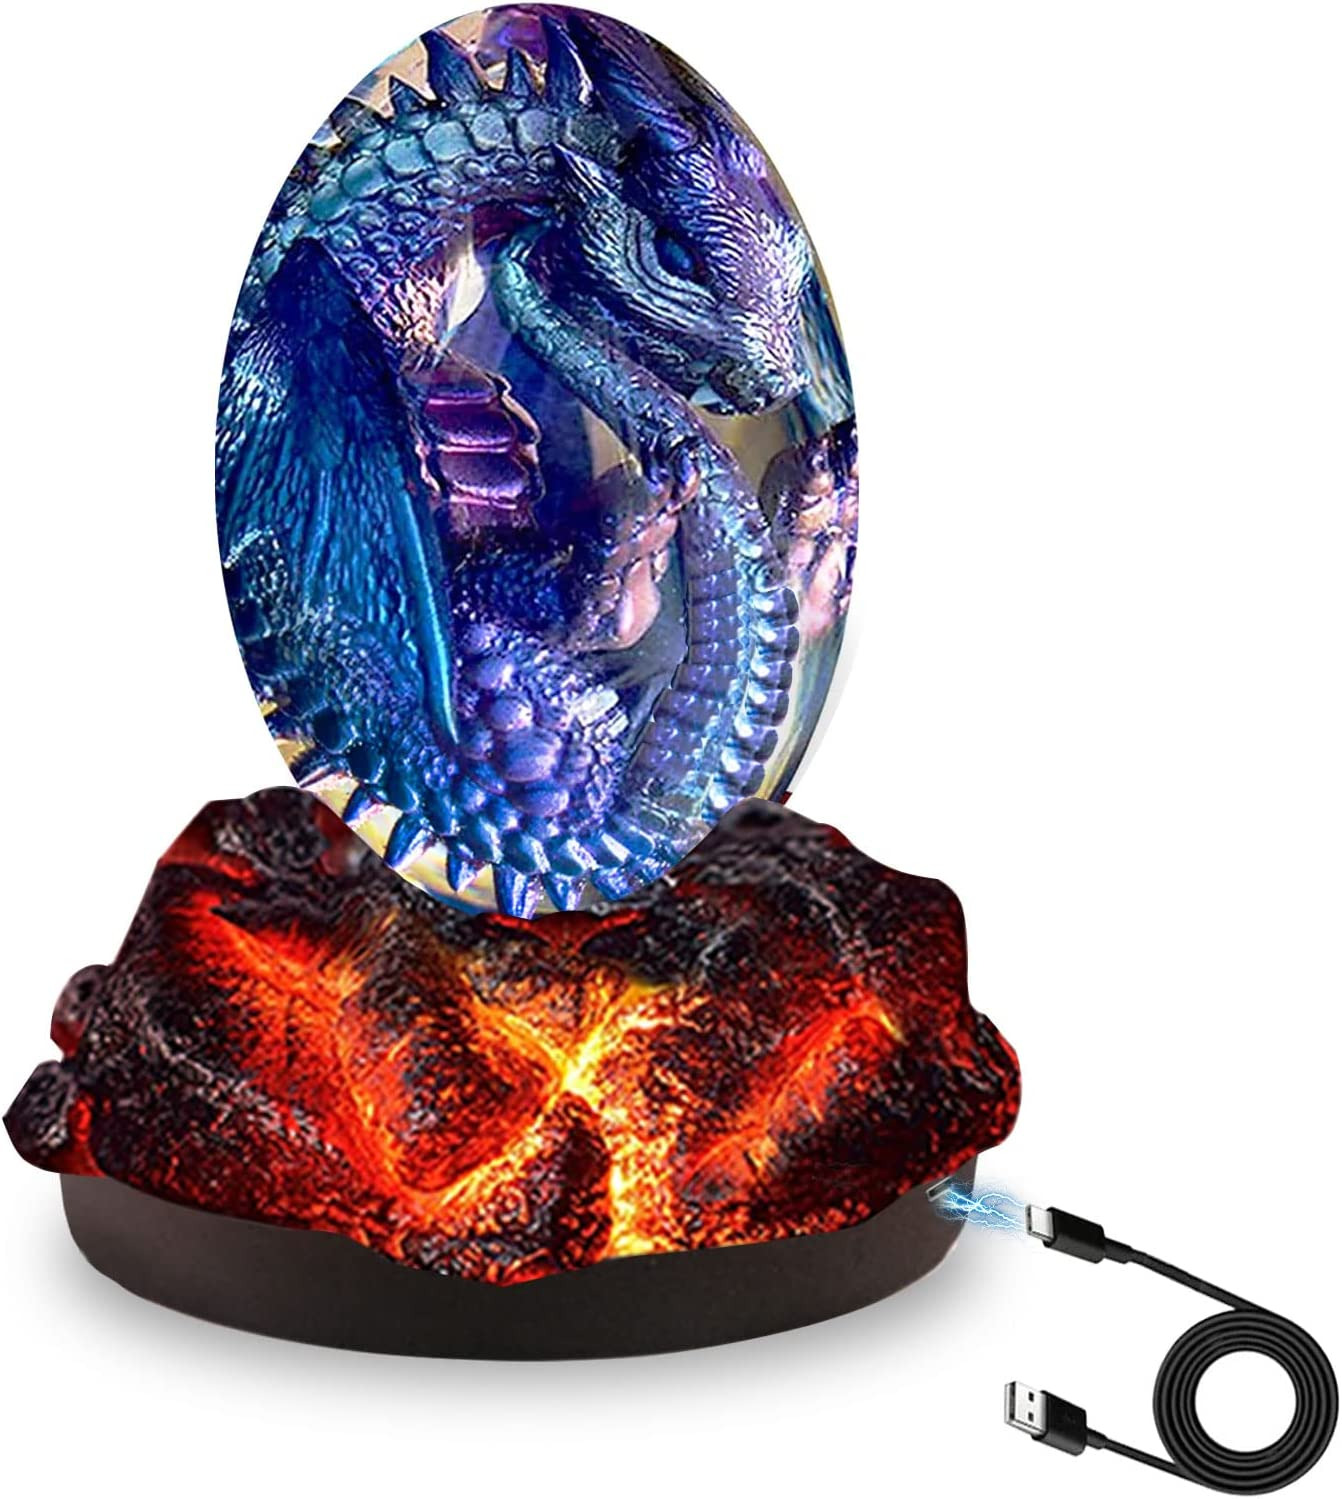 Lava Dragon Eggs with Base - Crystal Resin Ornaments, Handmade Dragon Gifts